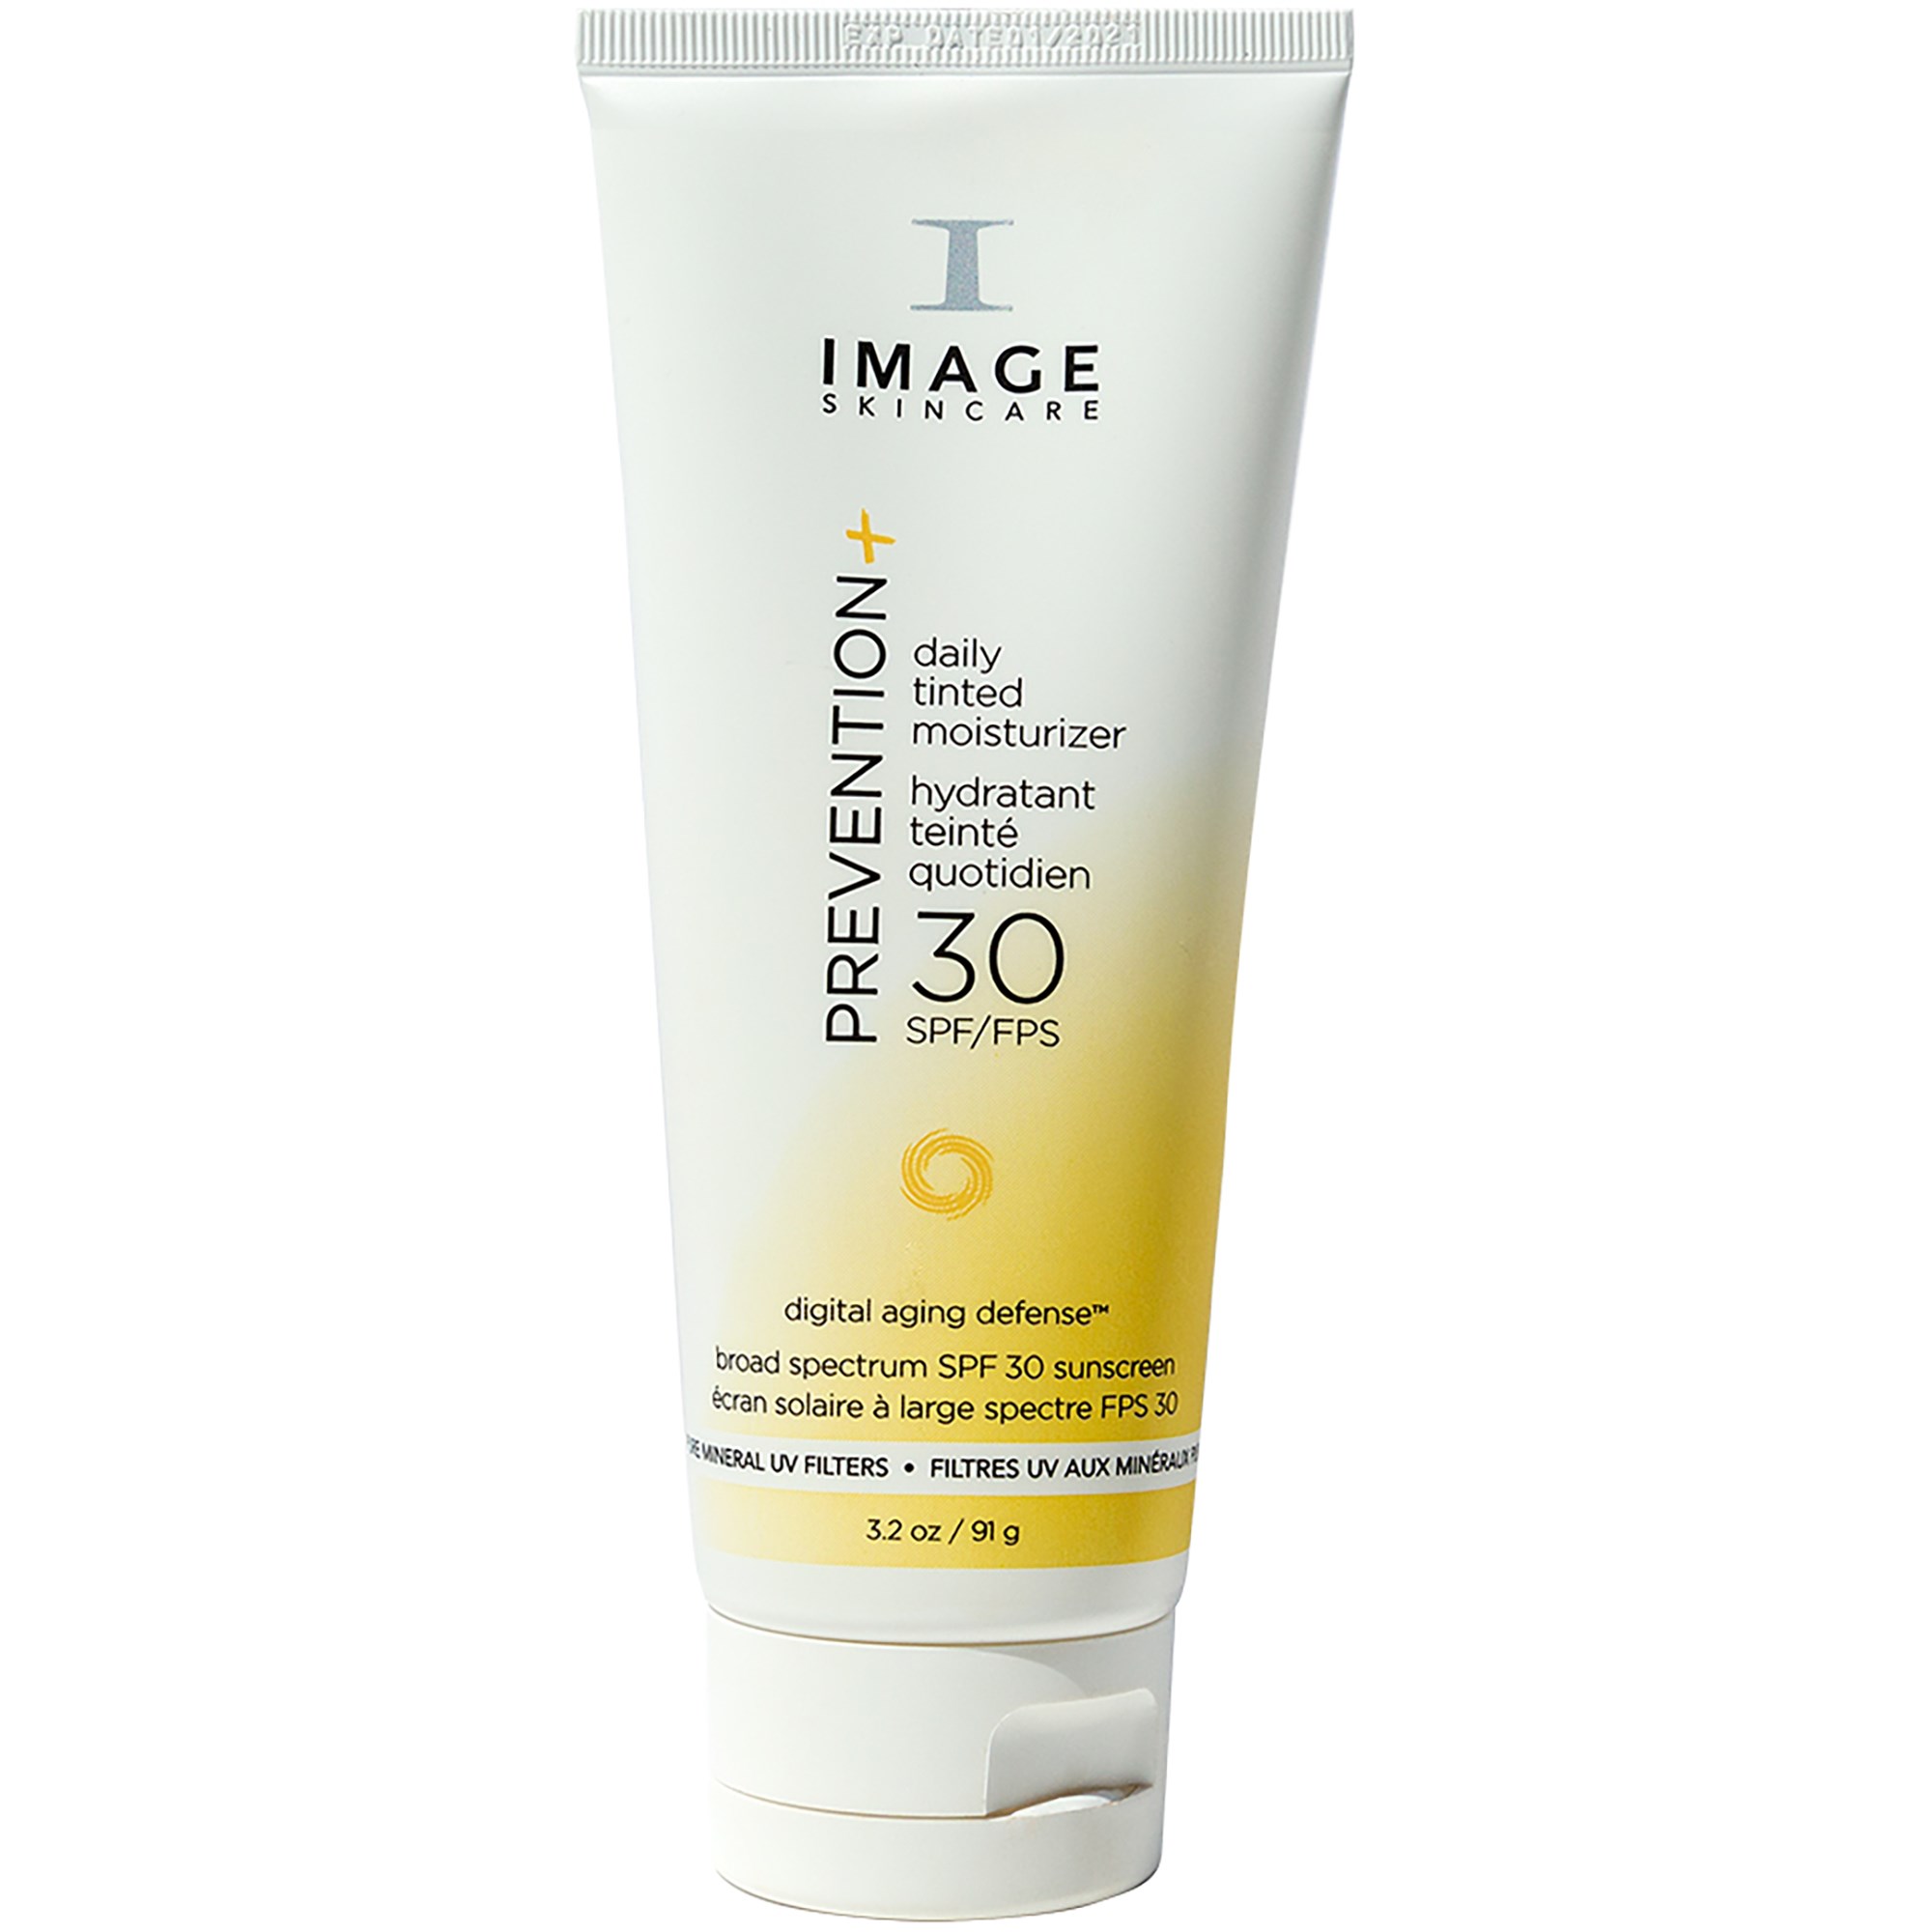 IMAGE Skincare Prevention+ Daily Tinted Moisturizer SPF 30 91 g